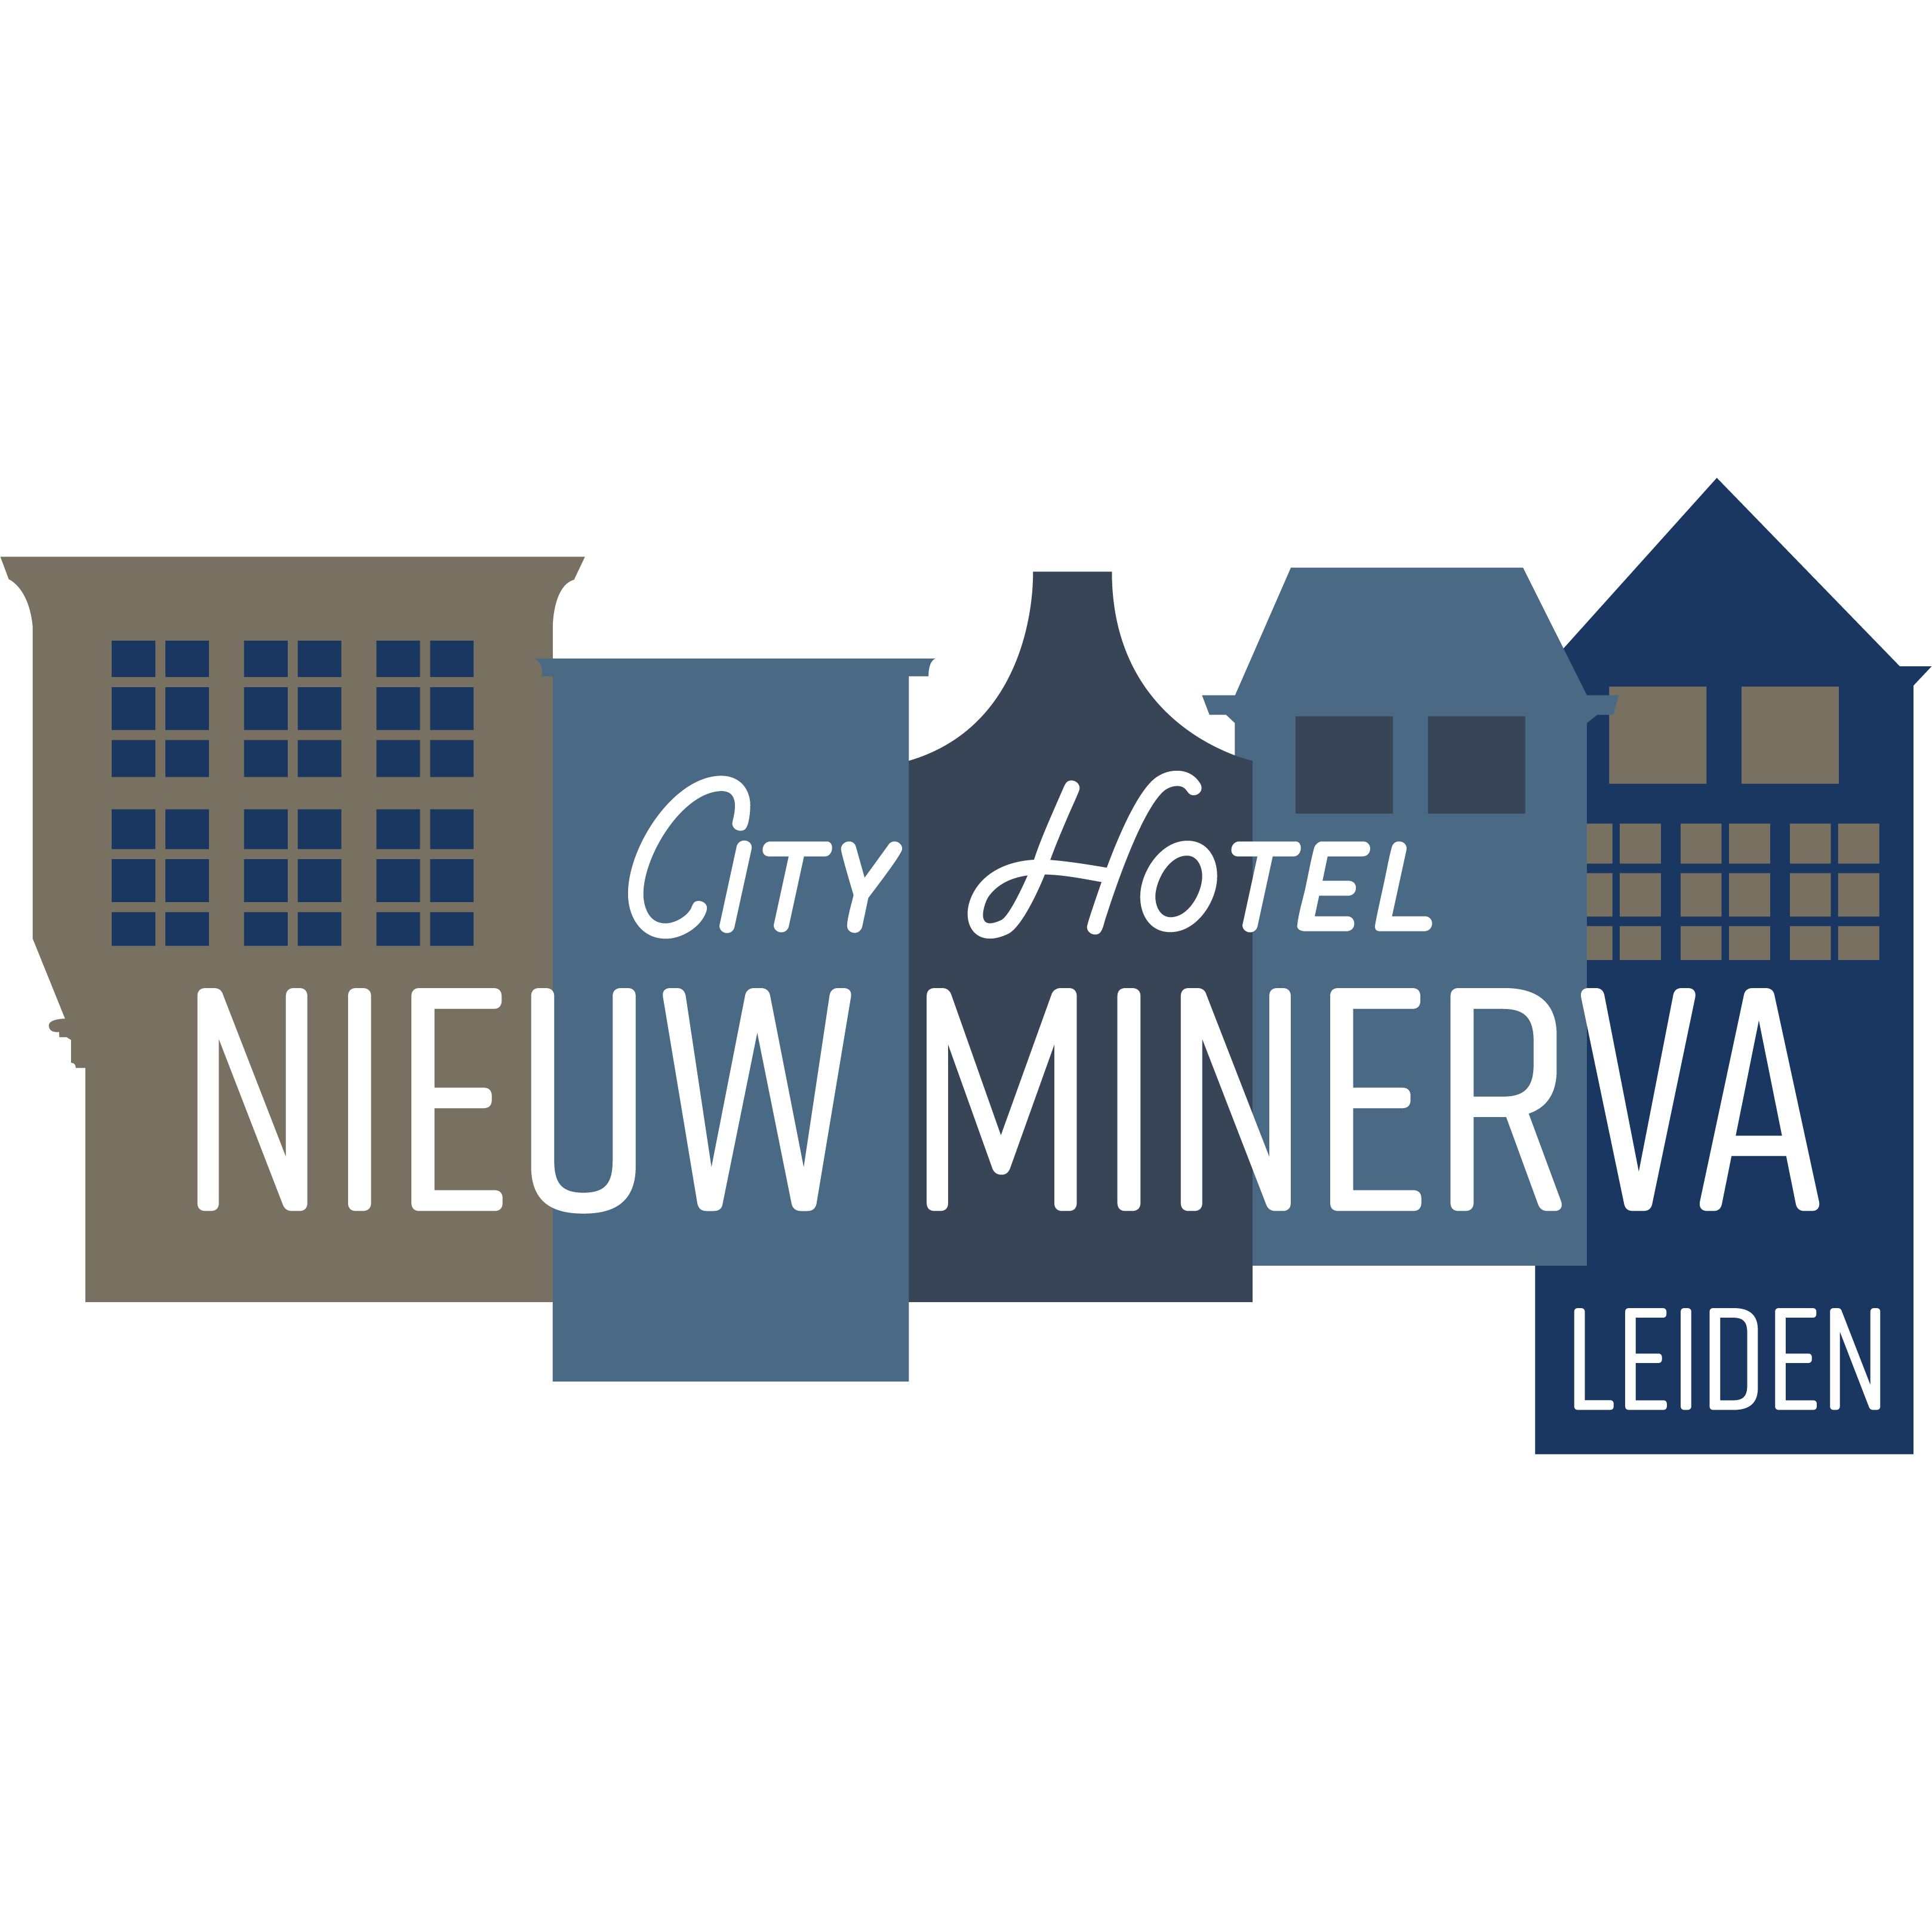 City Hotel Nieuw Minerva - Hotel - Leiden - 071 512 6358 Netherlands | ShowMeLocal.com